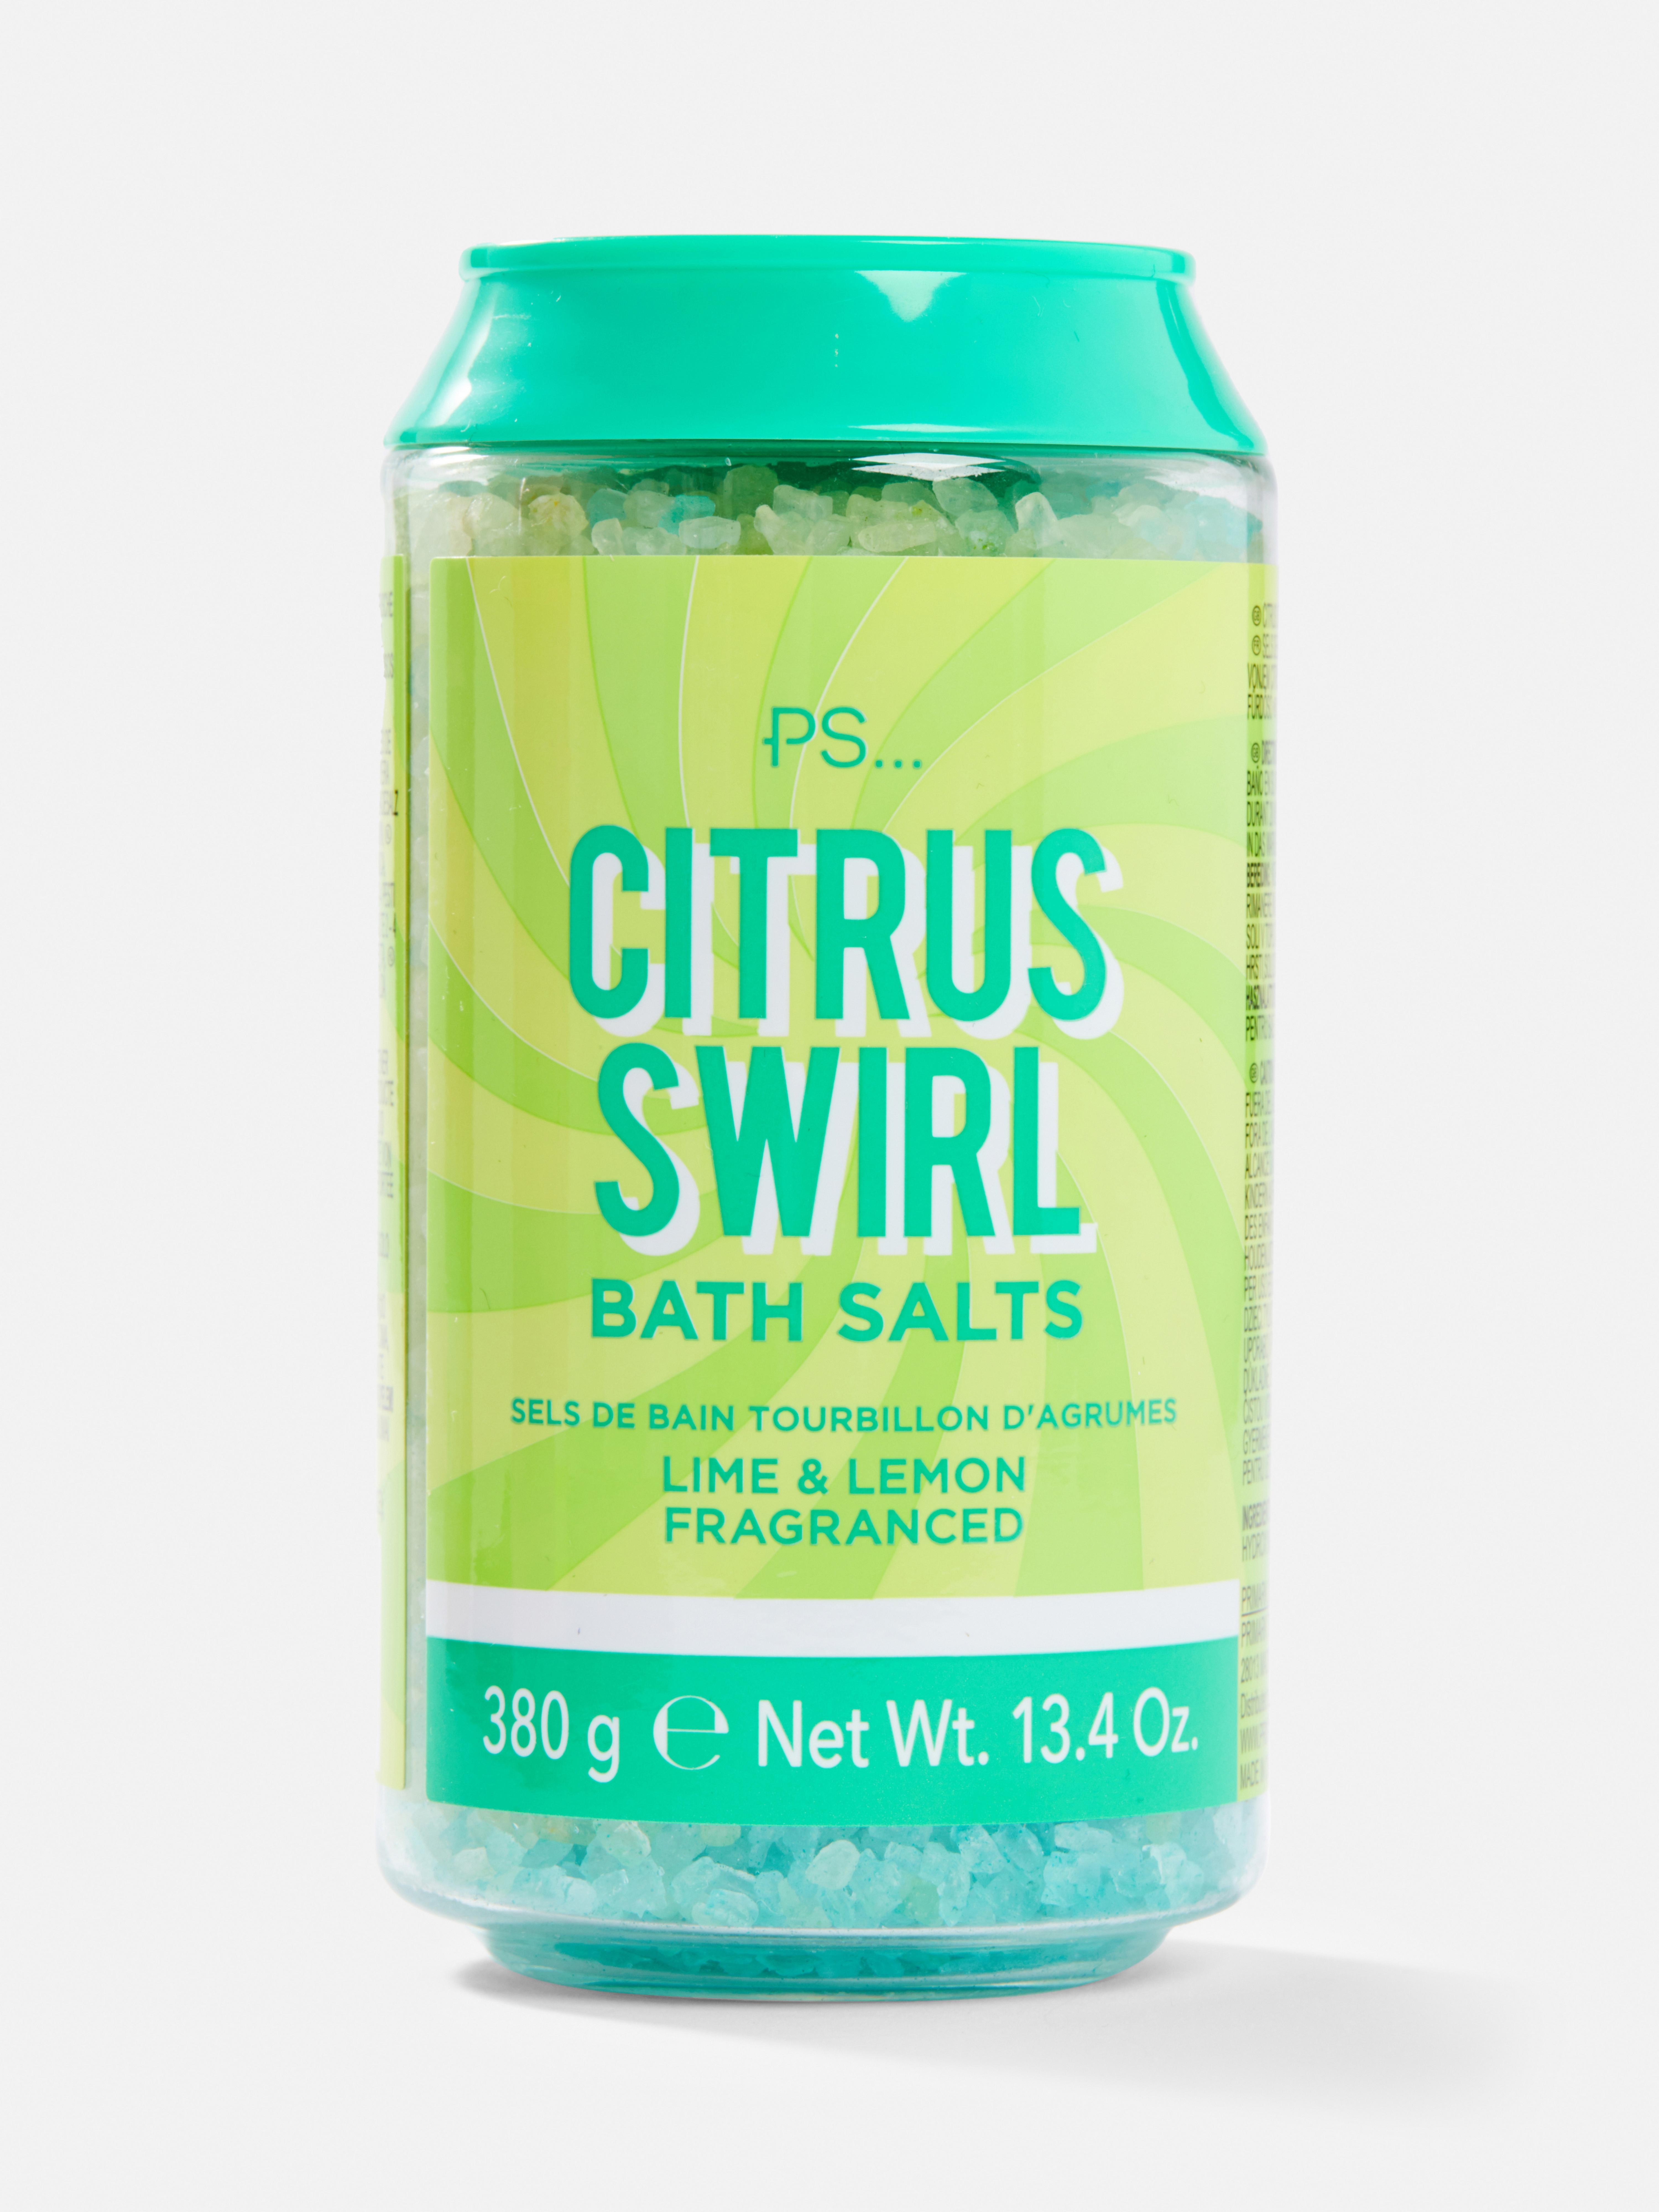 PS Citrus Swirl Bath Salts